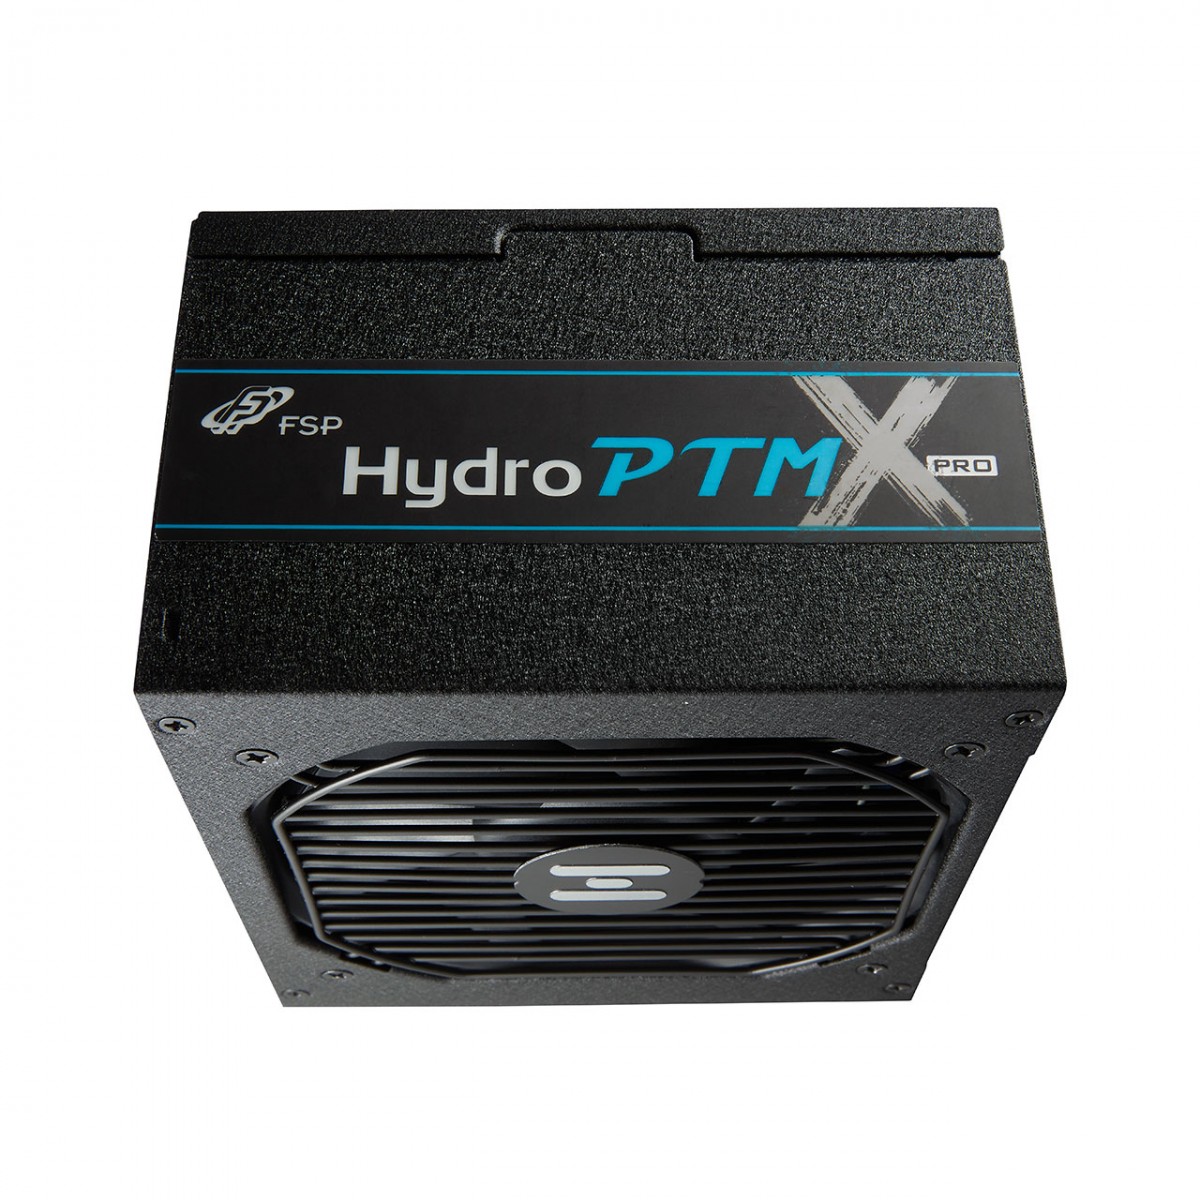 FSP Hydro G Pro 1000 watts : ATX 3.0 et PCIe 5.0 : L'alimentation